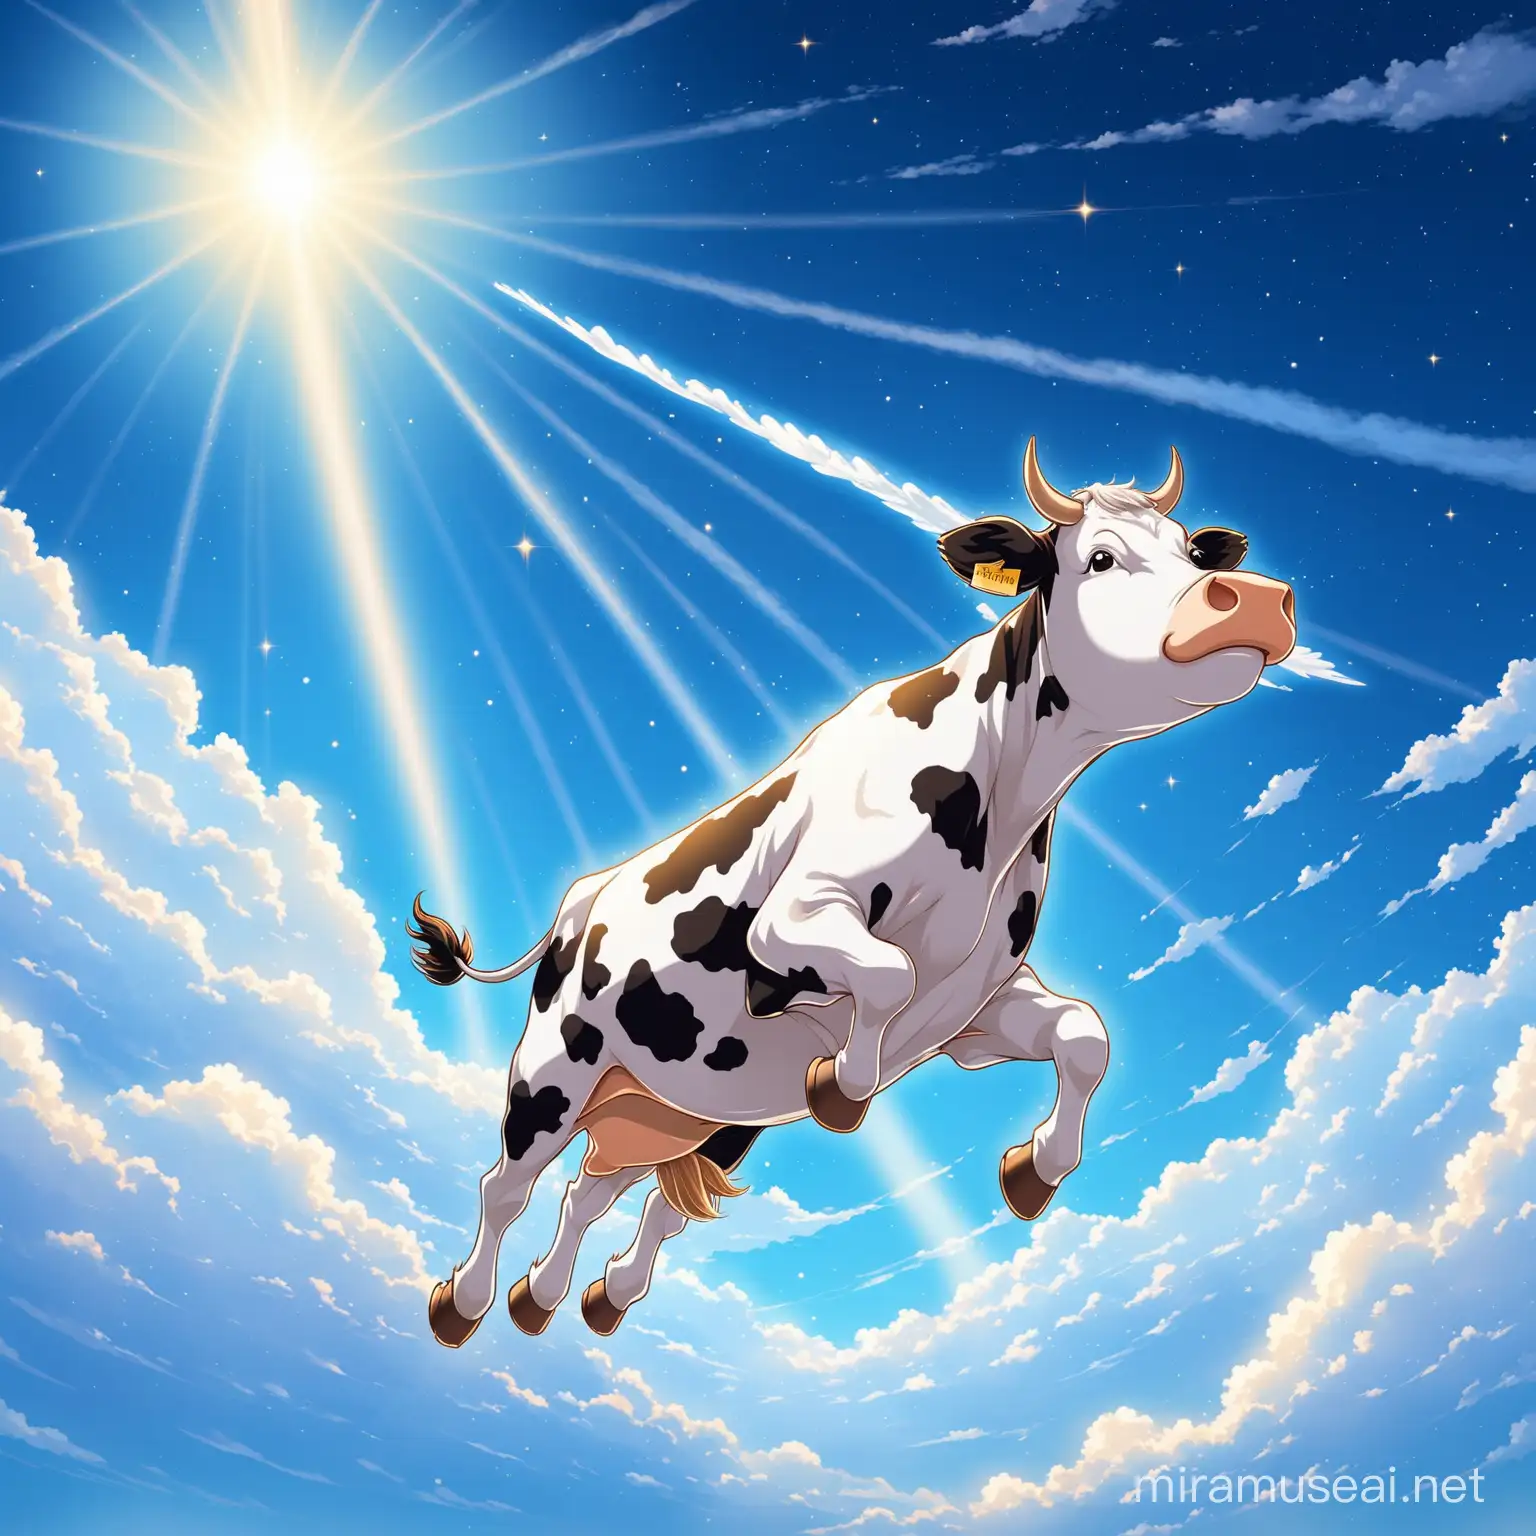 Flying Cow in Celestial Skies Surreal Art of Bovine Flight